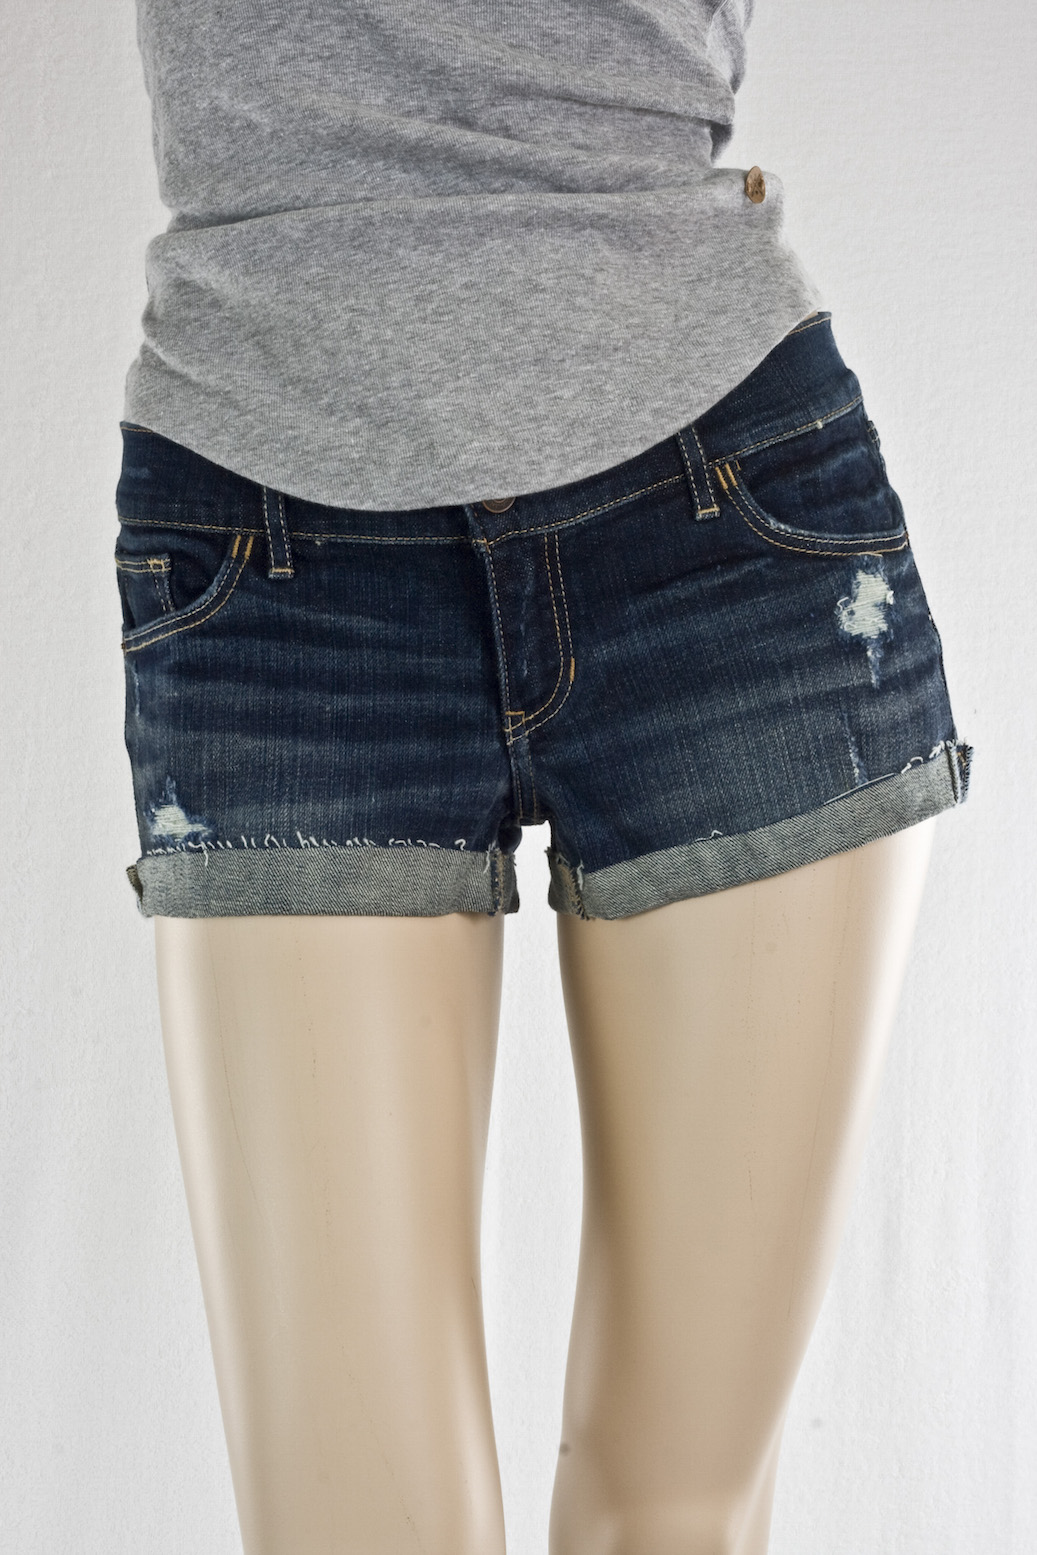 Женские джинсы Abercrombie & Fitch шорты SHORTS DARK BLUE интернет-магазин Fashion Jeans